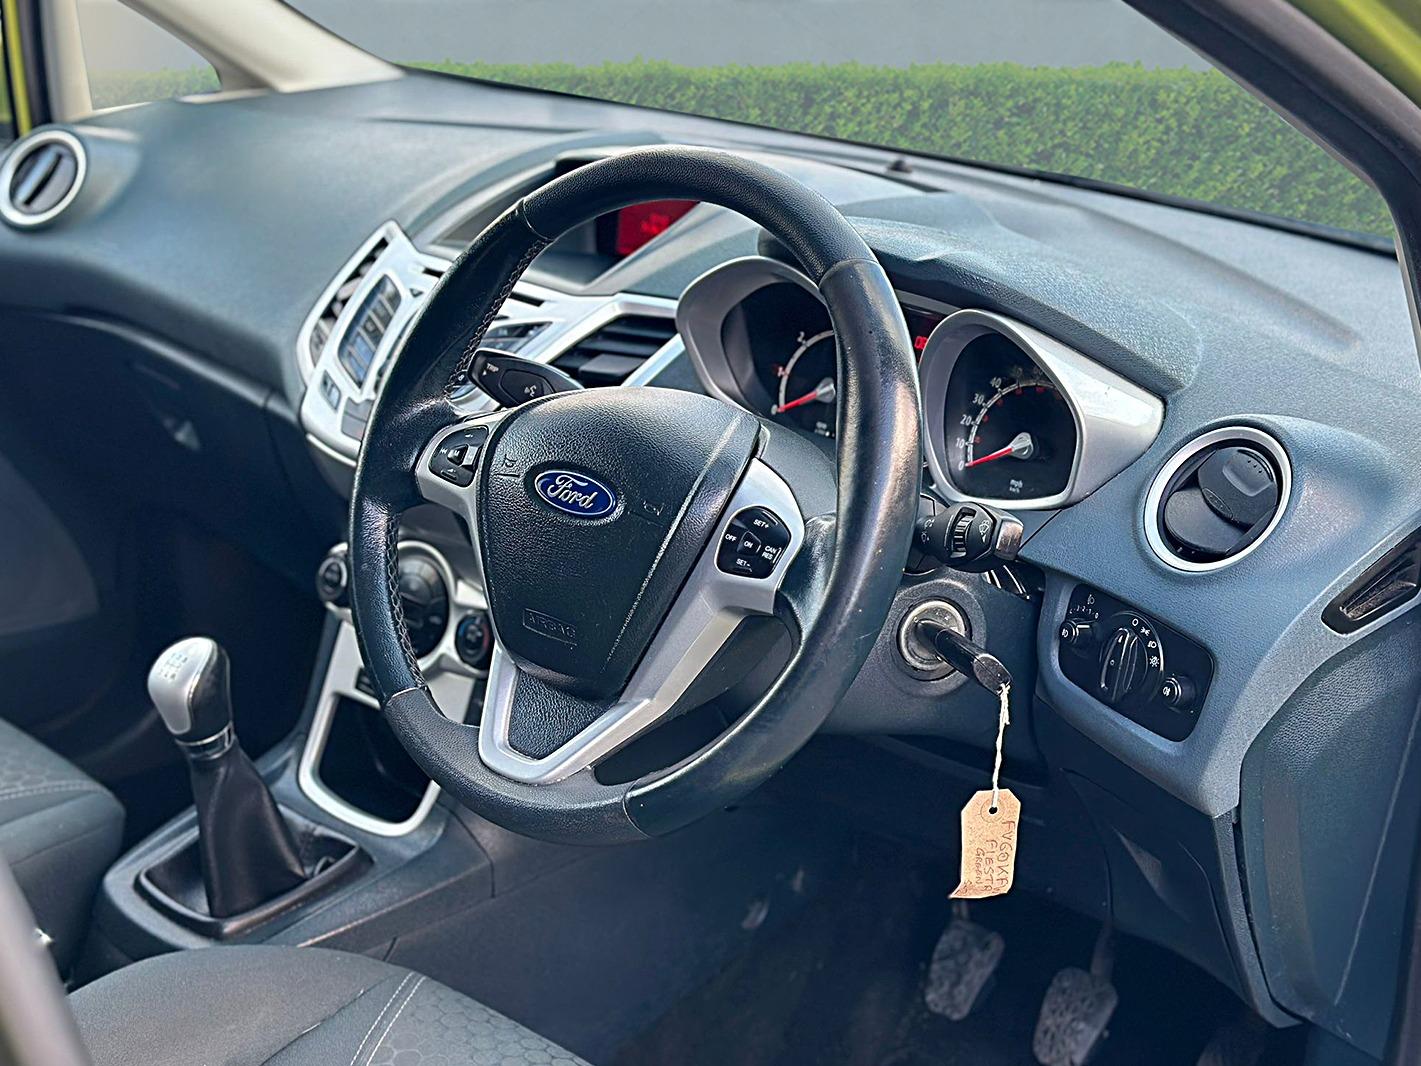 Ford Fiesta 1.6 Titanium Hatchback 5dr Petrol Manual (139 g/km, 118 bhp)